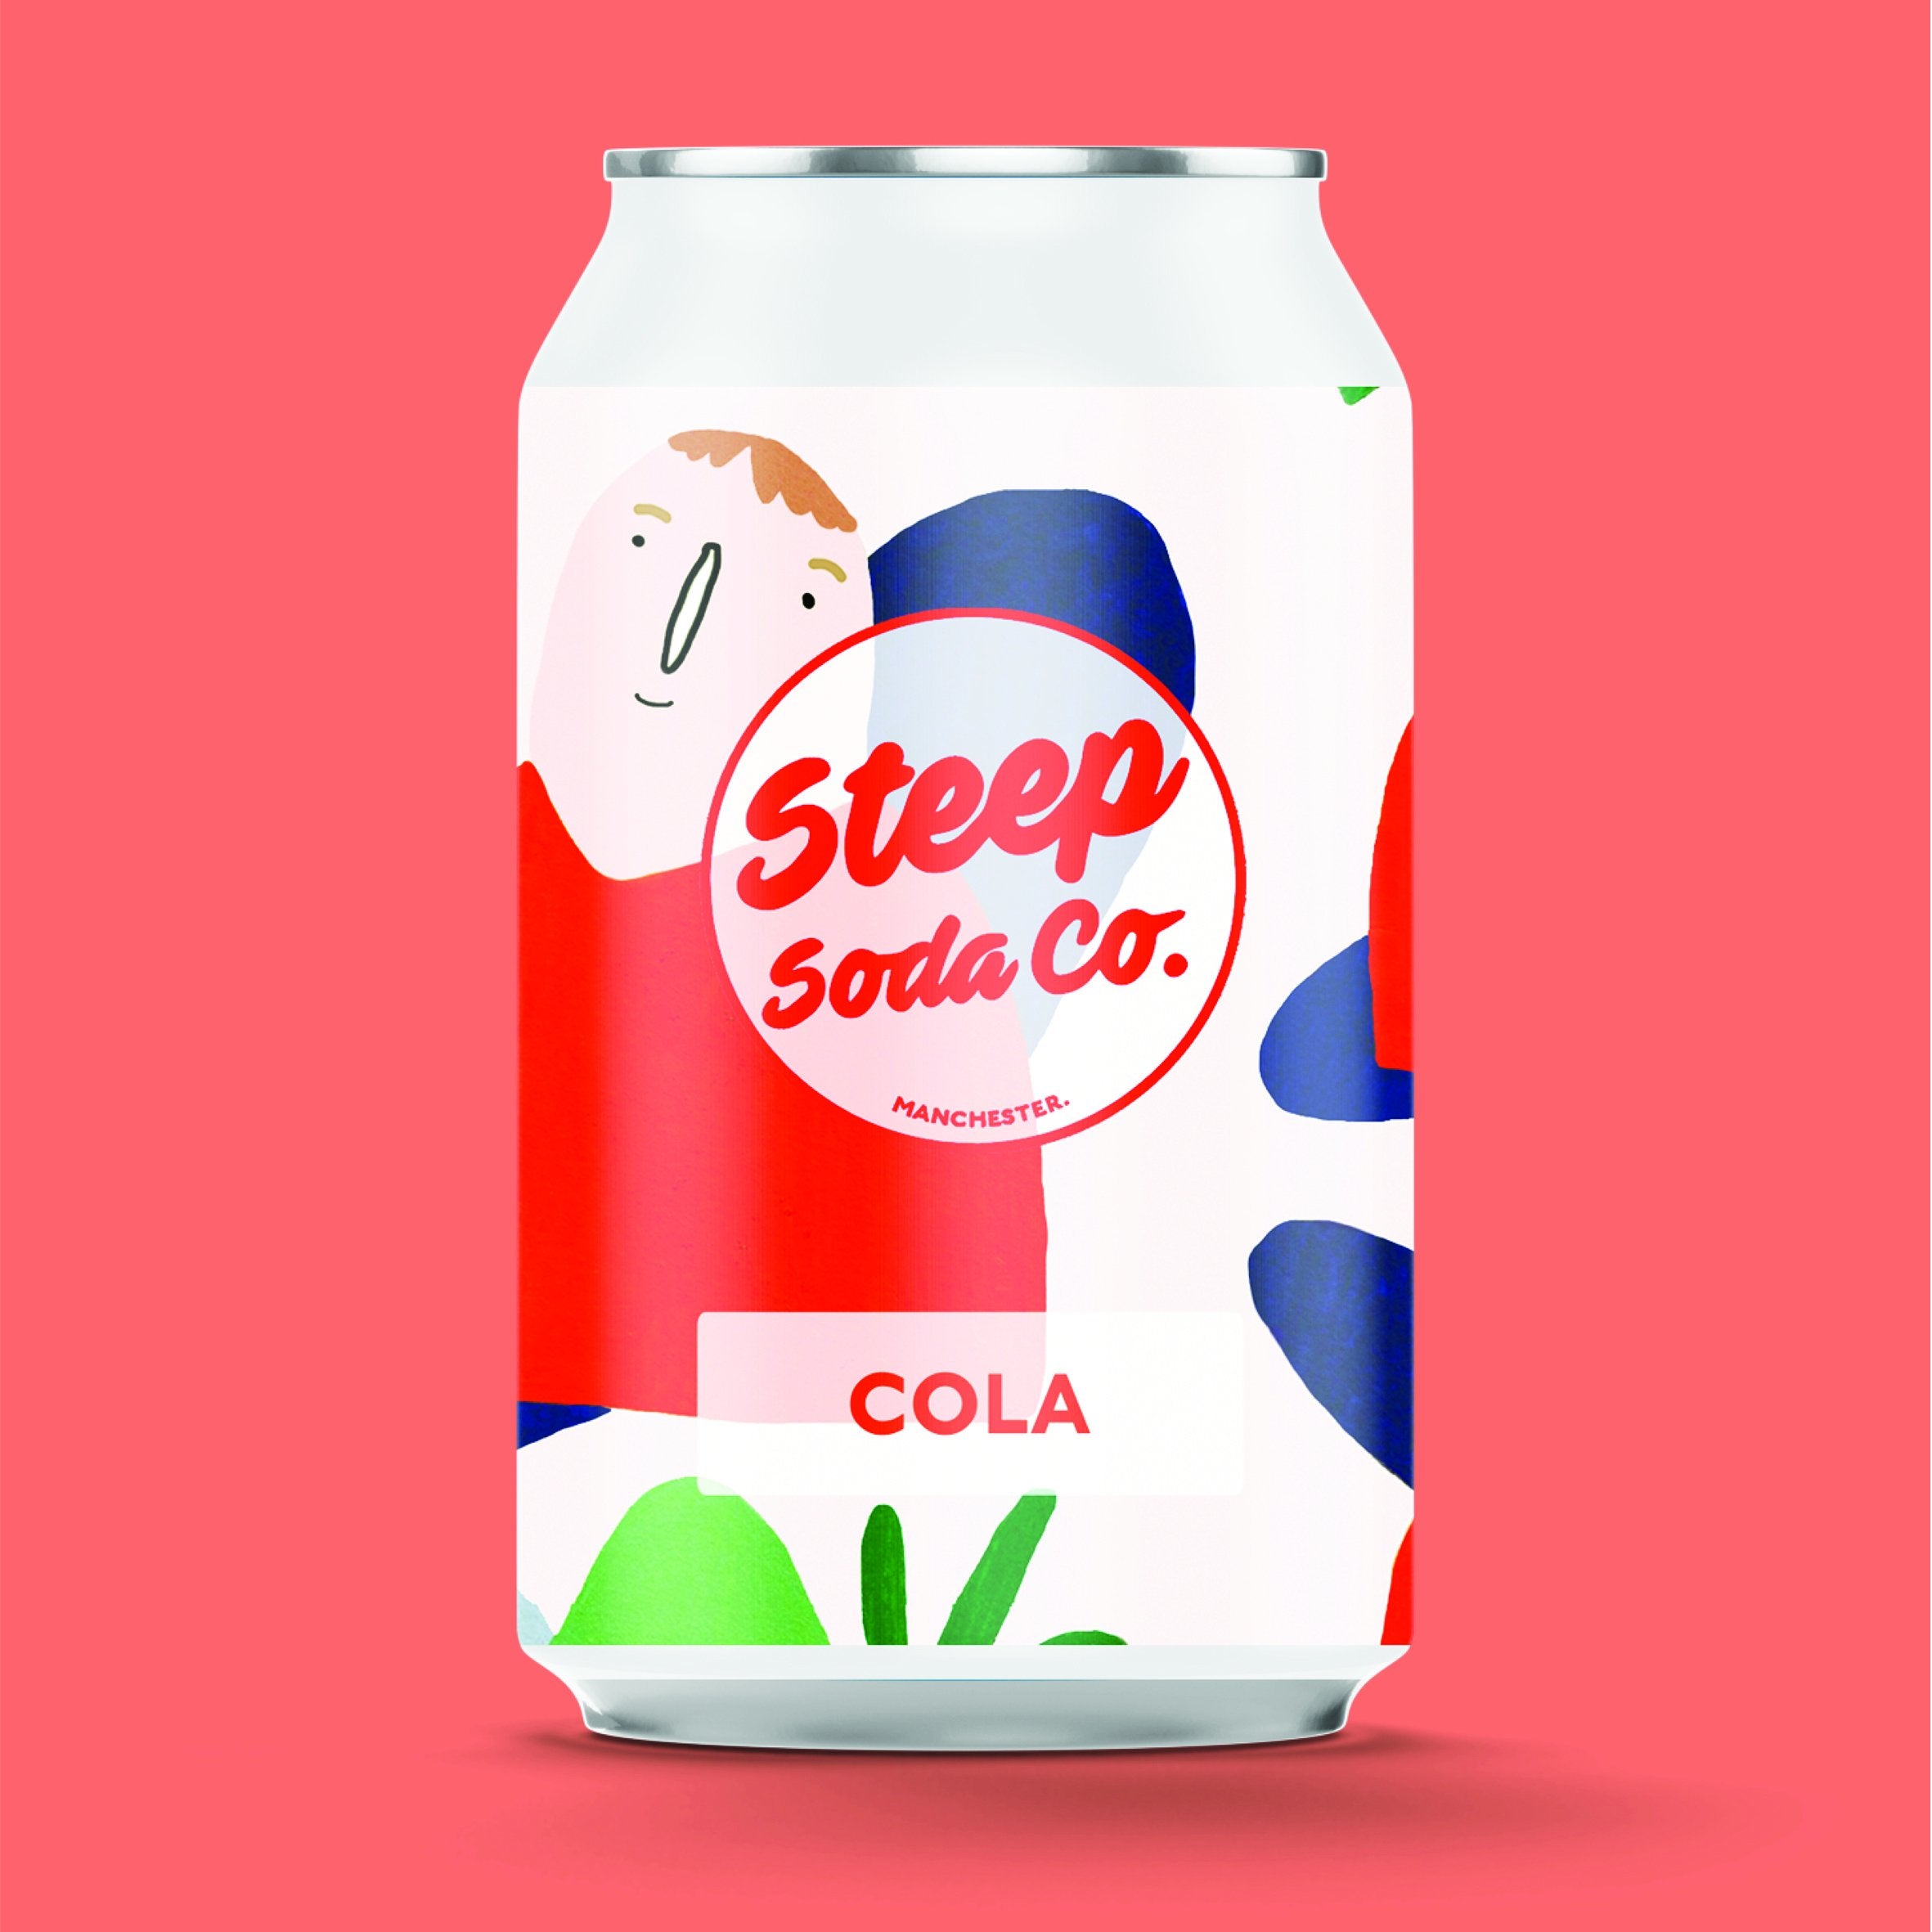 Steep Soda Co - Cola // Stores Supply // Steep Soda Co